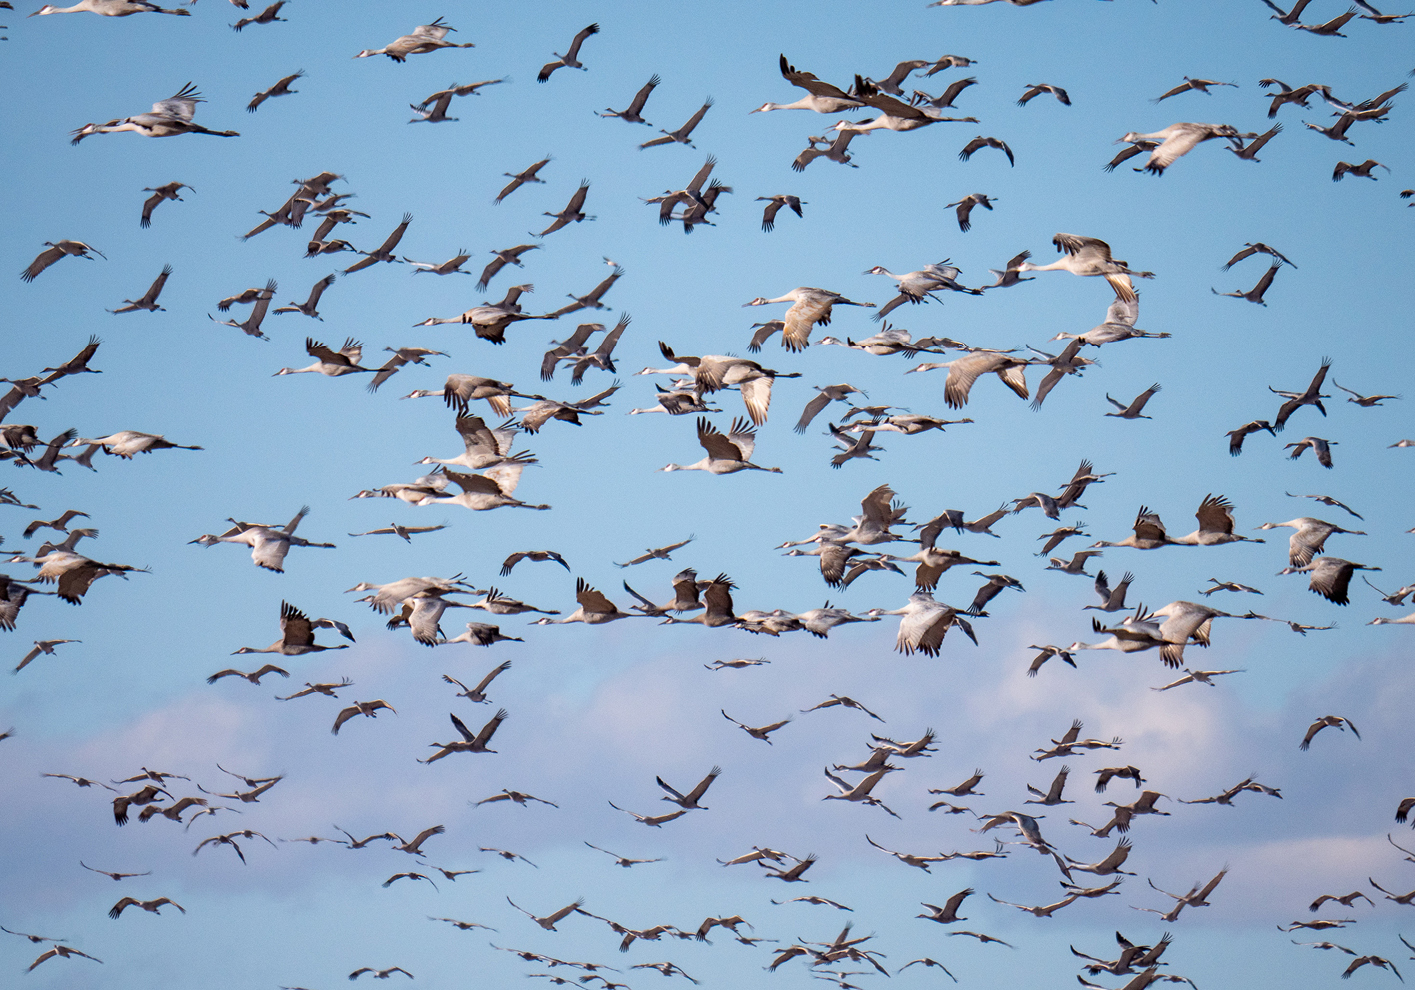 flocks of sandhill cranes pass through Zapata during migration season